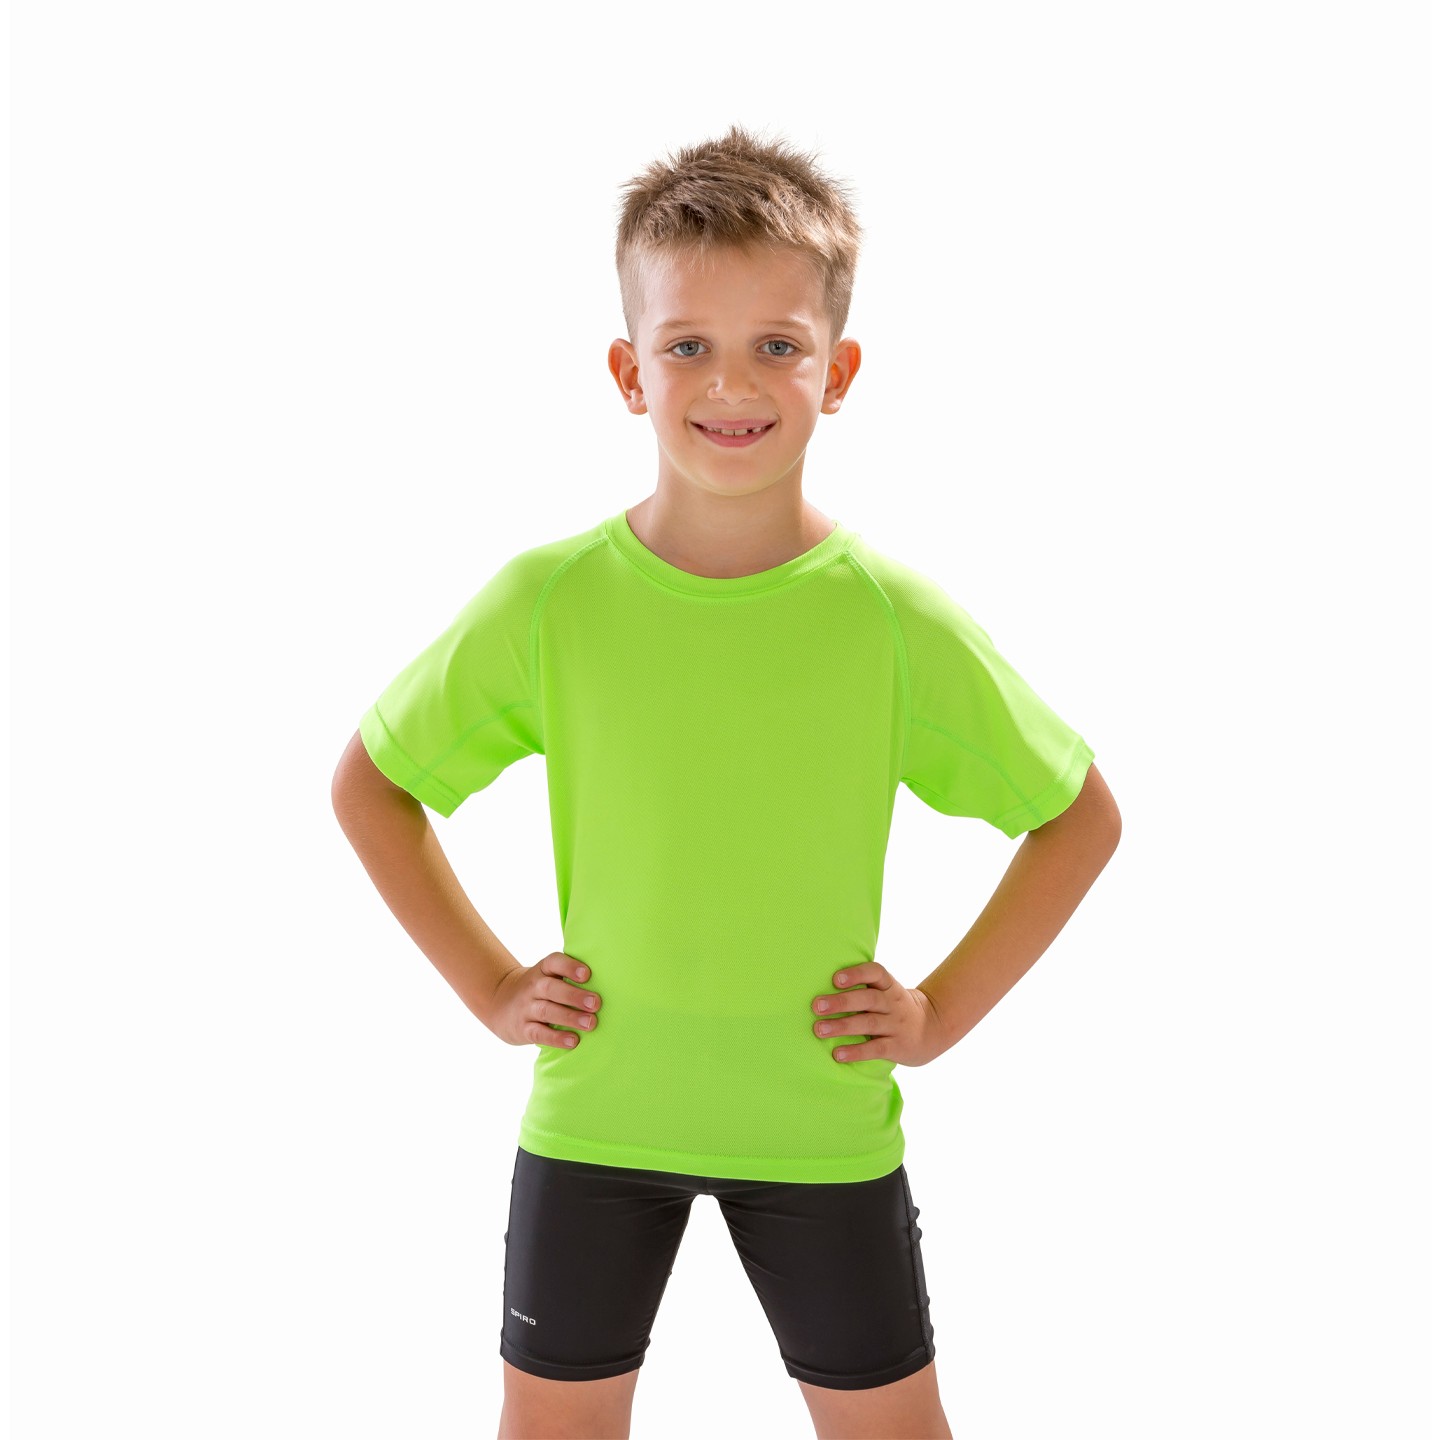 Spiro Junior Body Fit Shorts Sports Fitness Wear Short Athletic Stretch Kids 